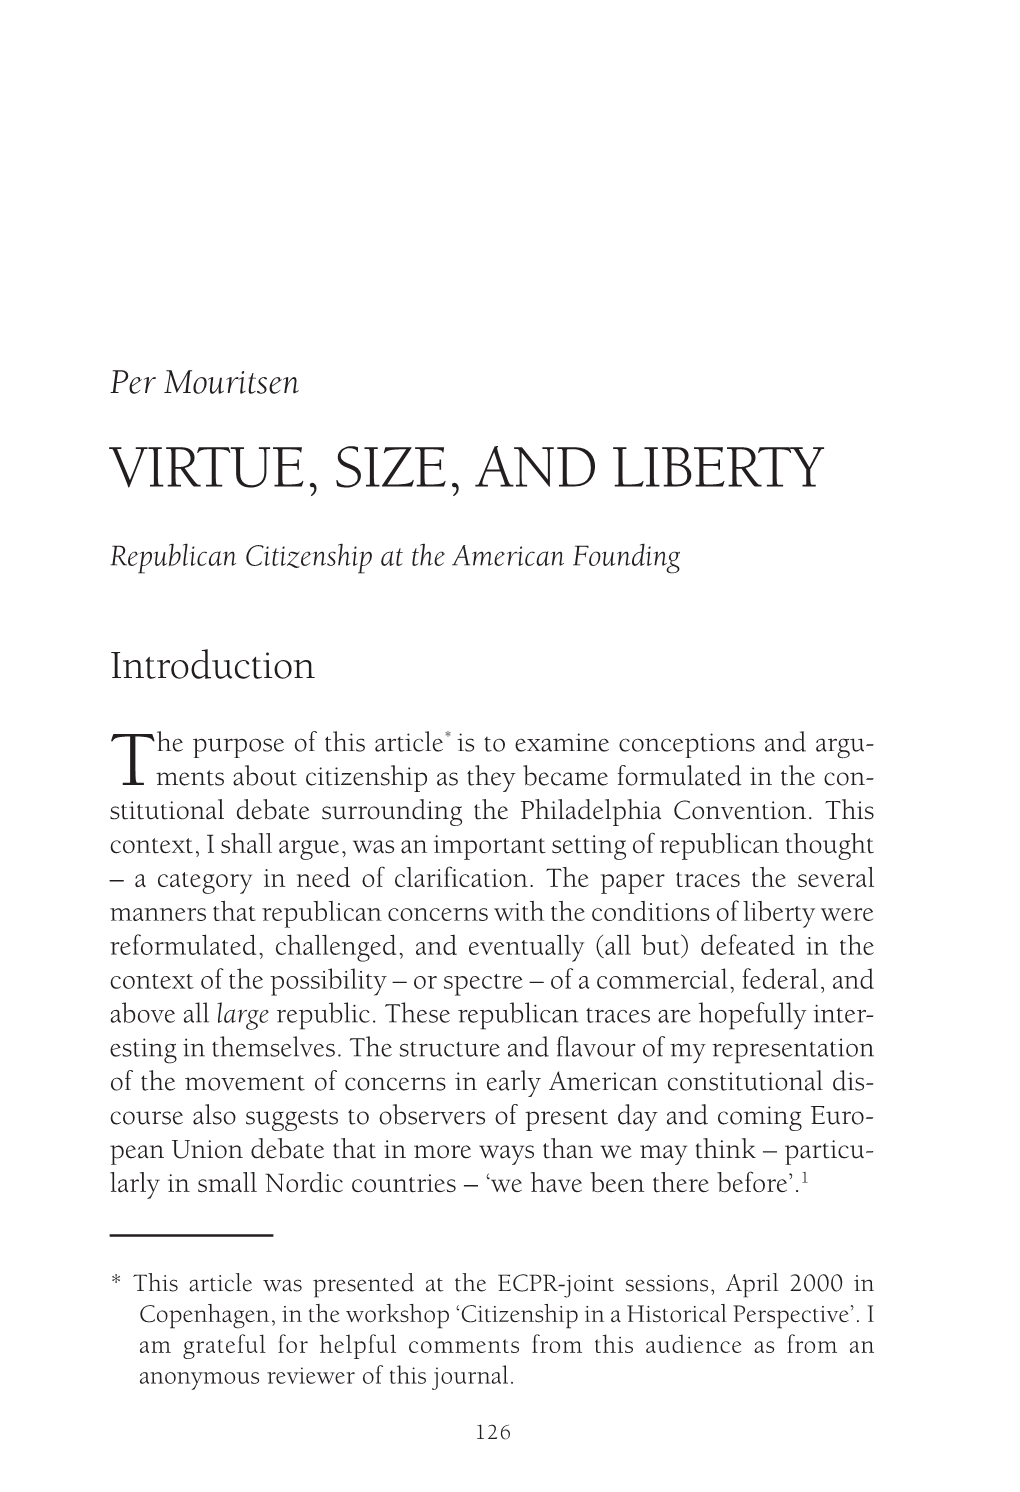 Virtue, Size, and Liberty